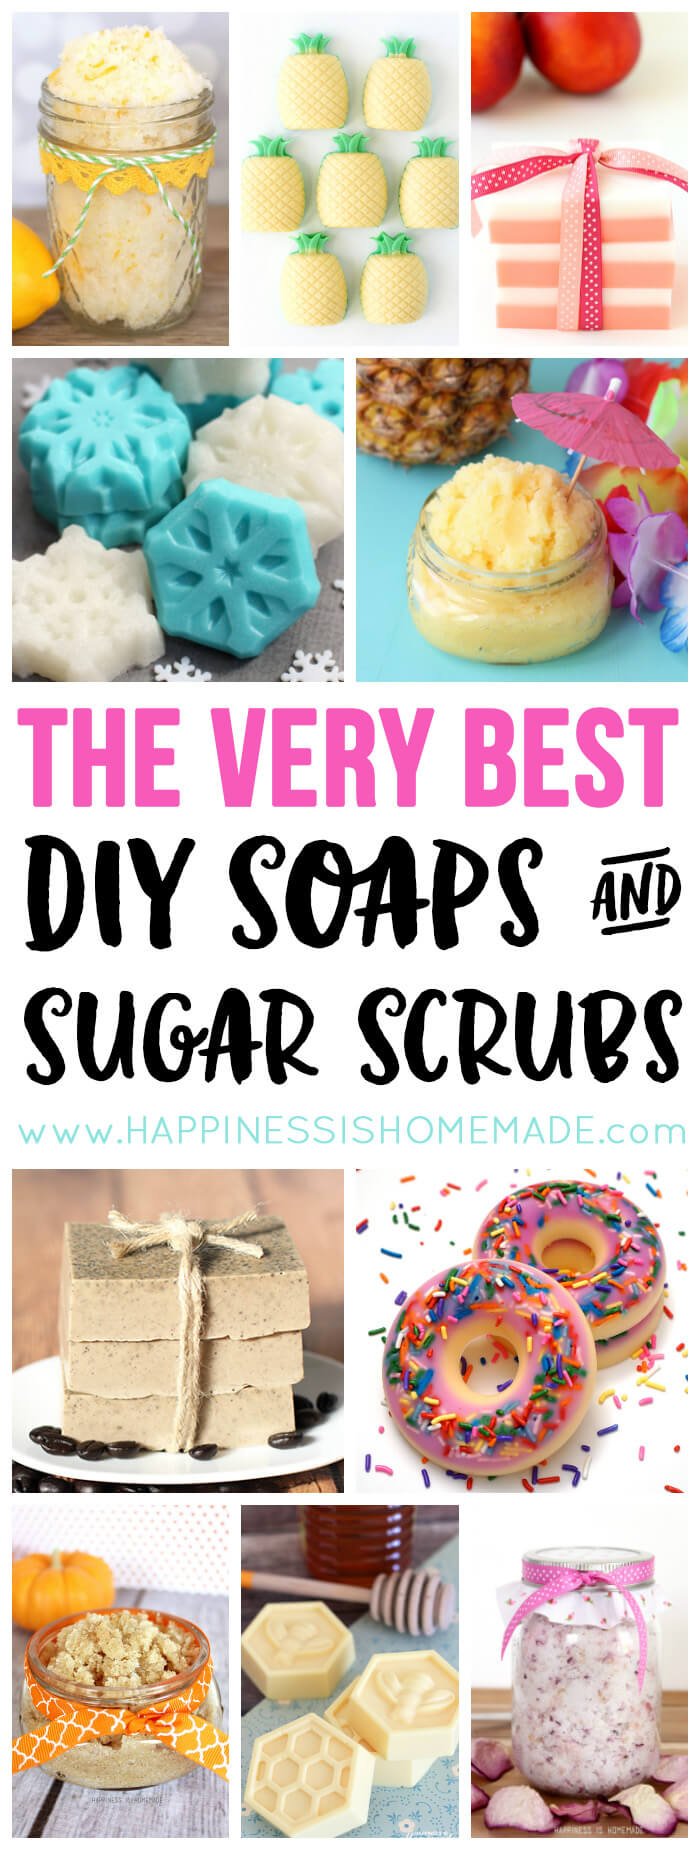 The BEST DIY Soaps & Sugar Scrubs